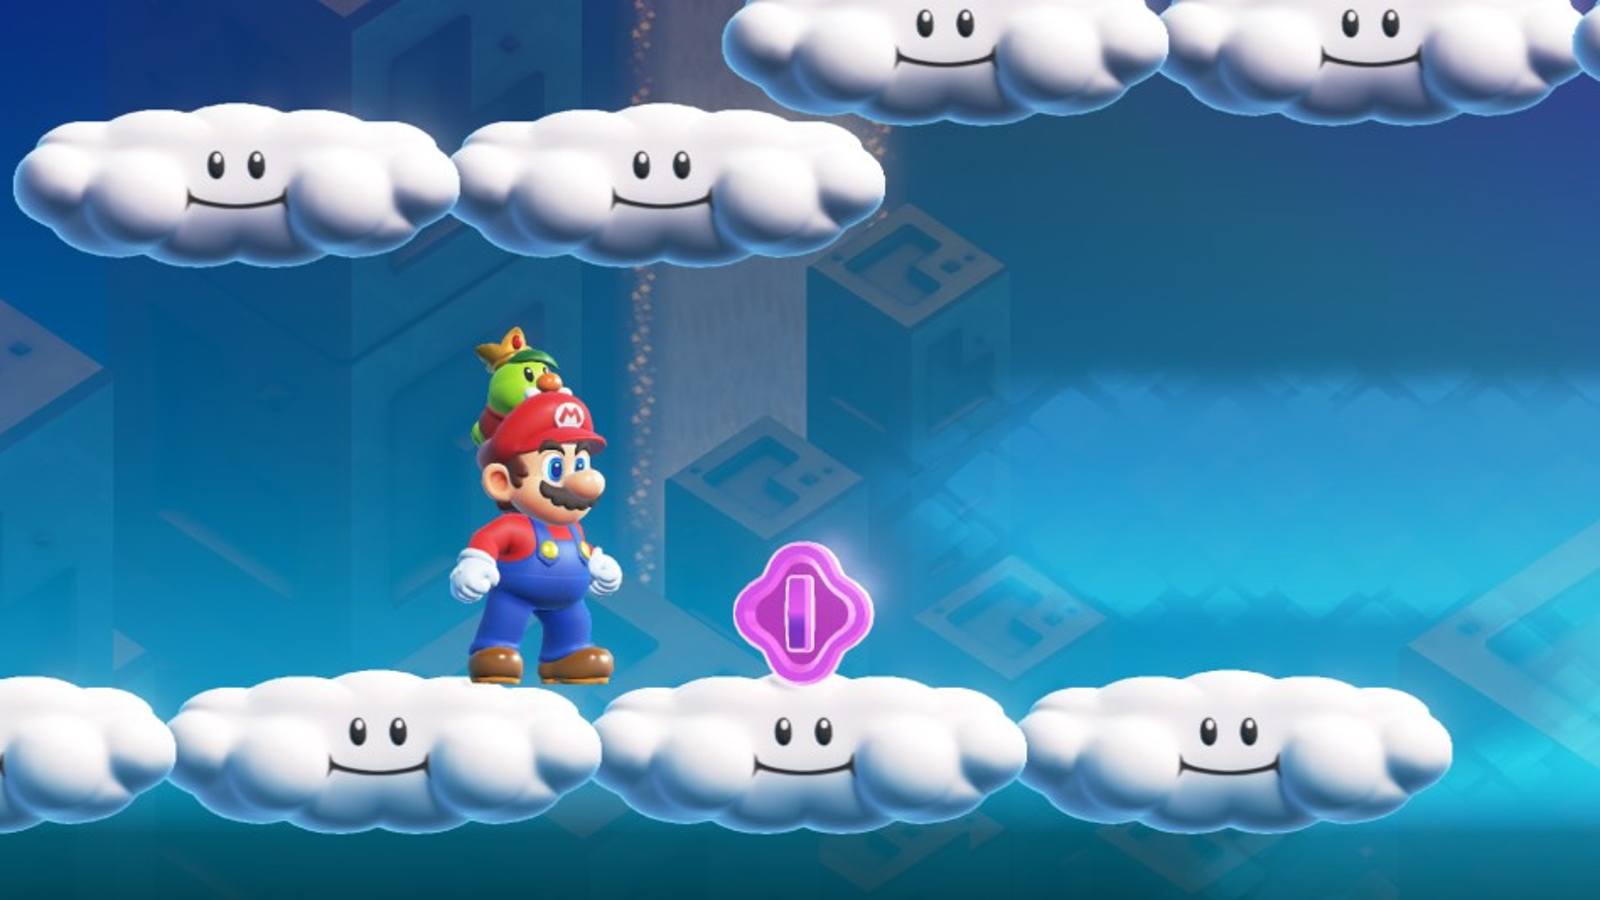 Super Mario Bros. Wonder - Nintendo Direct 6.21.2023 